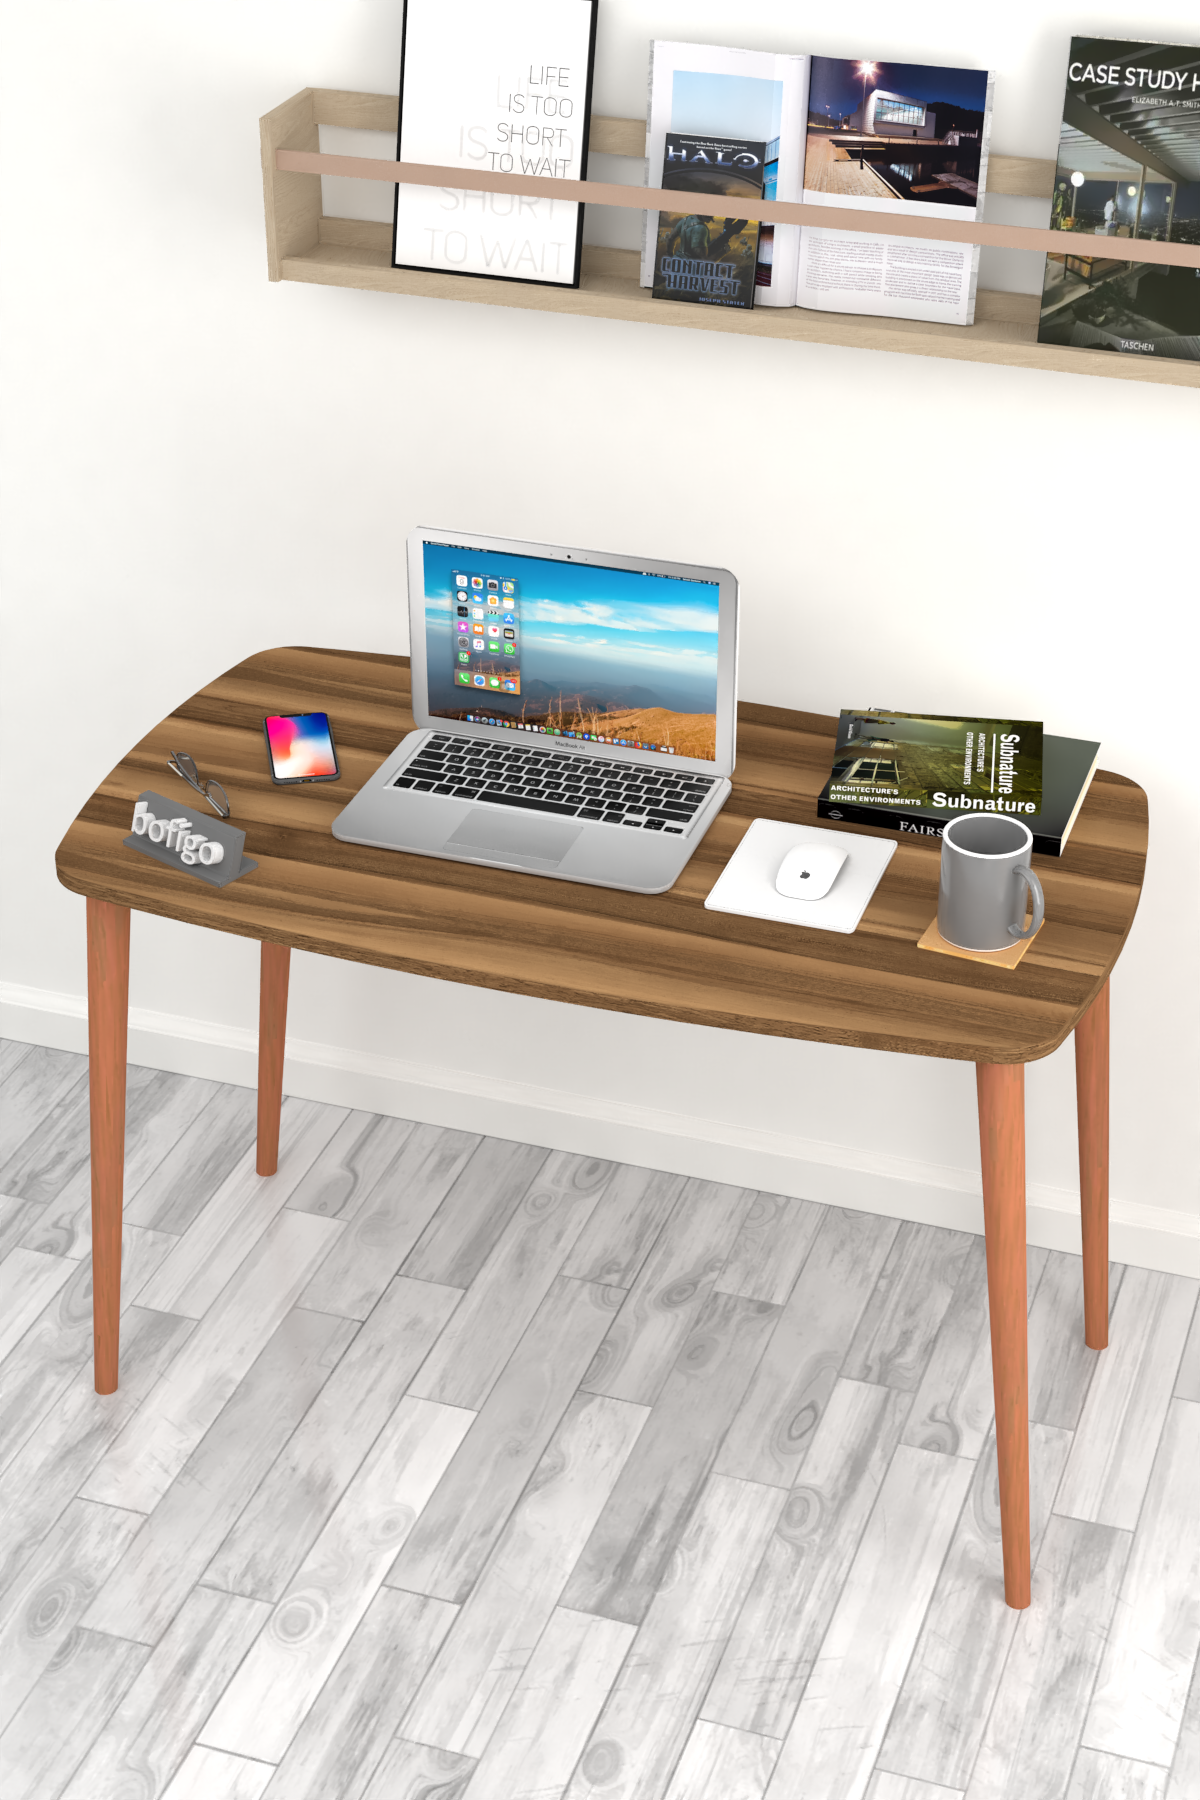 Bofigo Desk 60x105 Cm Walnut (Wooden Leg)